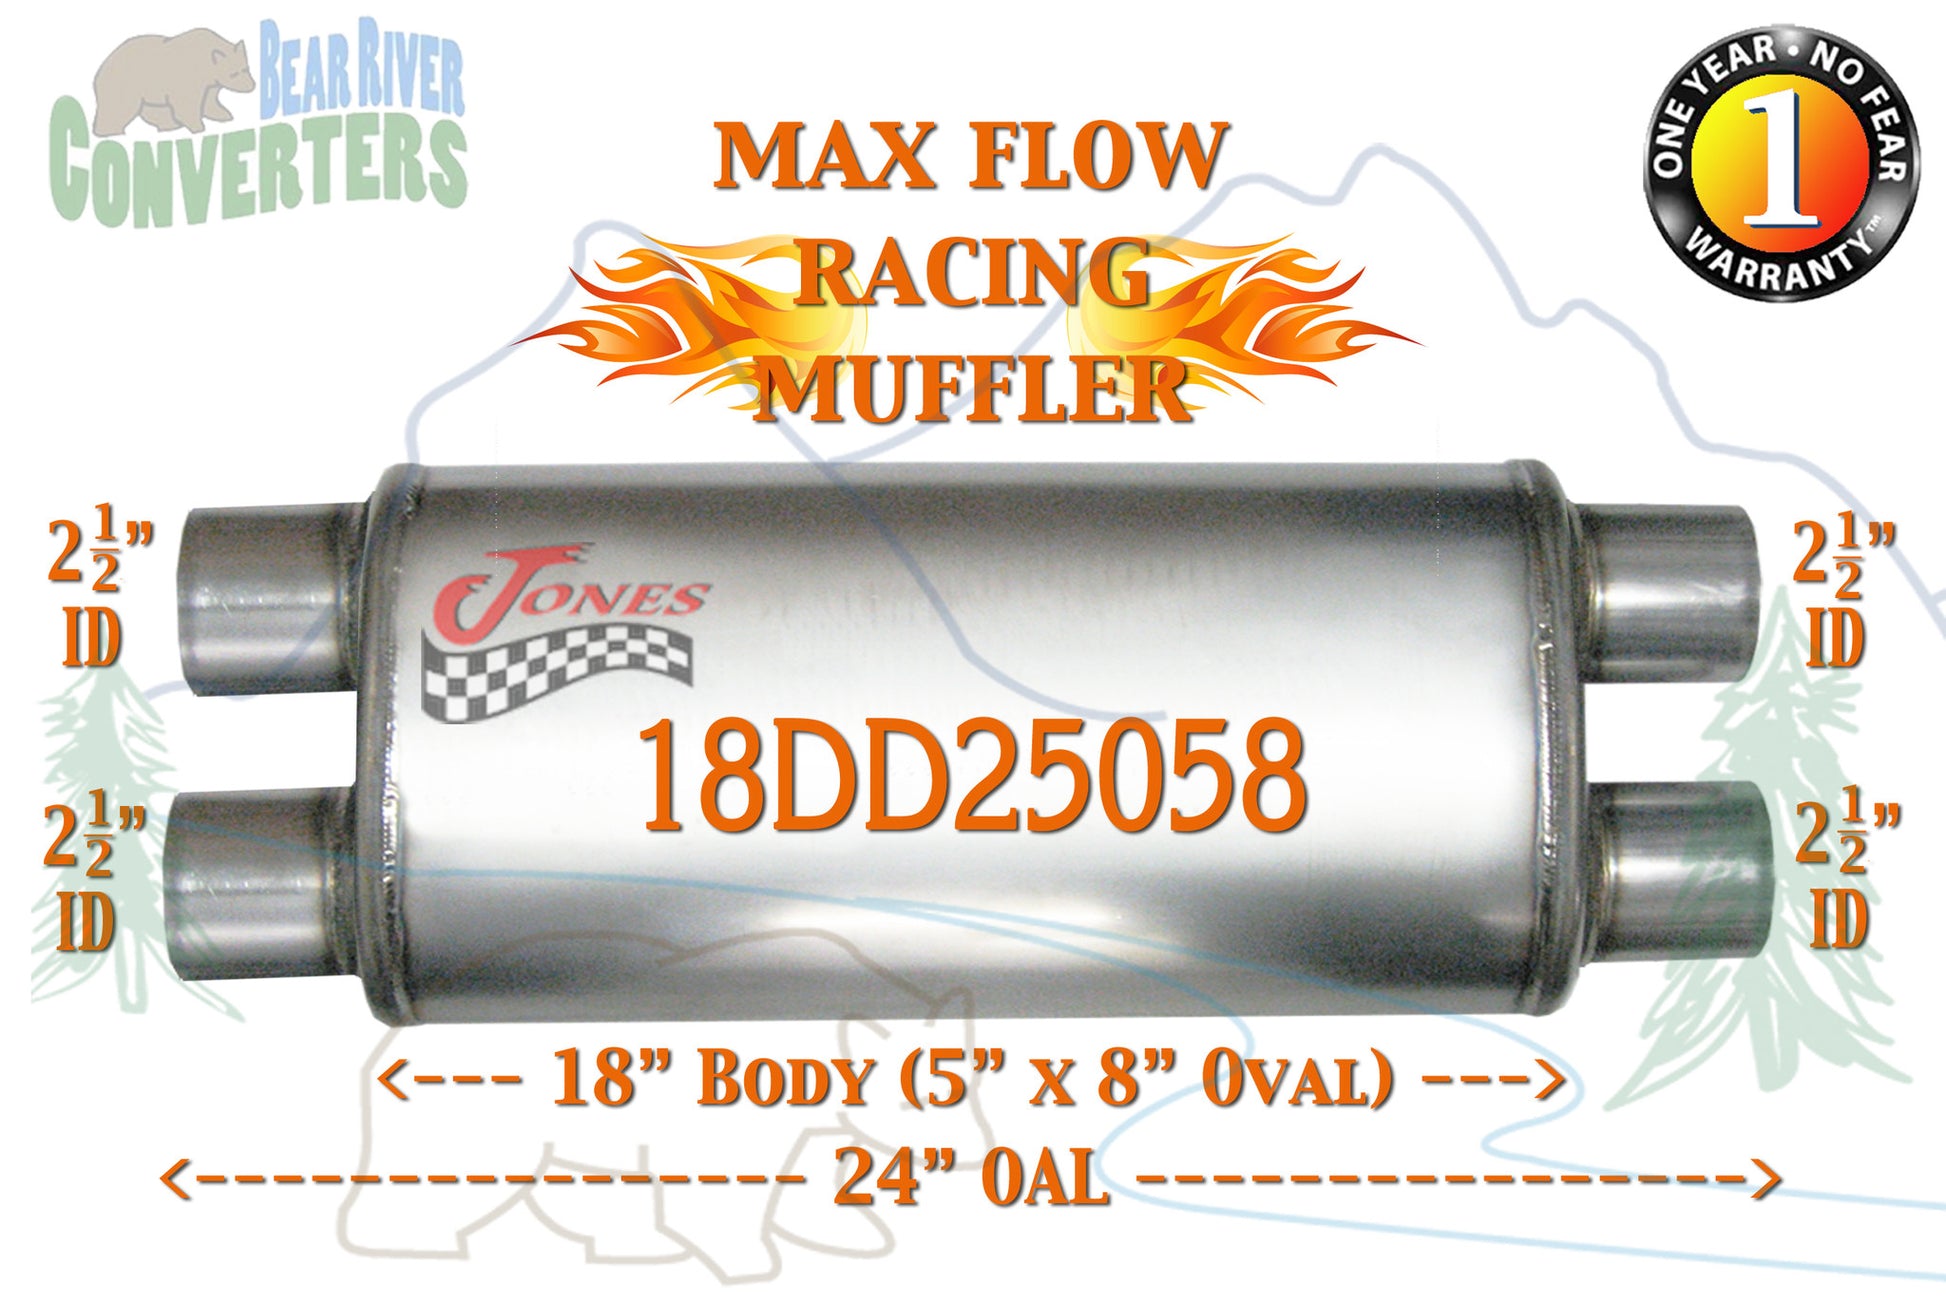 18DD25058 Jones MF2468 Max Flow Racing Muffler 18” Oval Body 2 1/2” 2.5” Pipe Dual/Dual 24” OAL - Bear River Converters